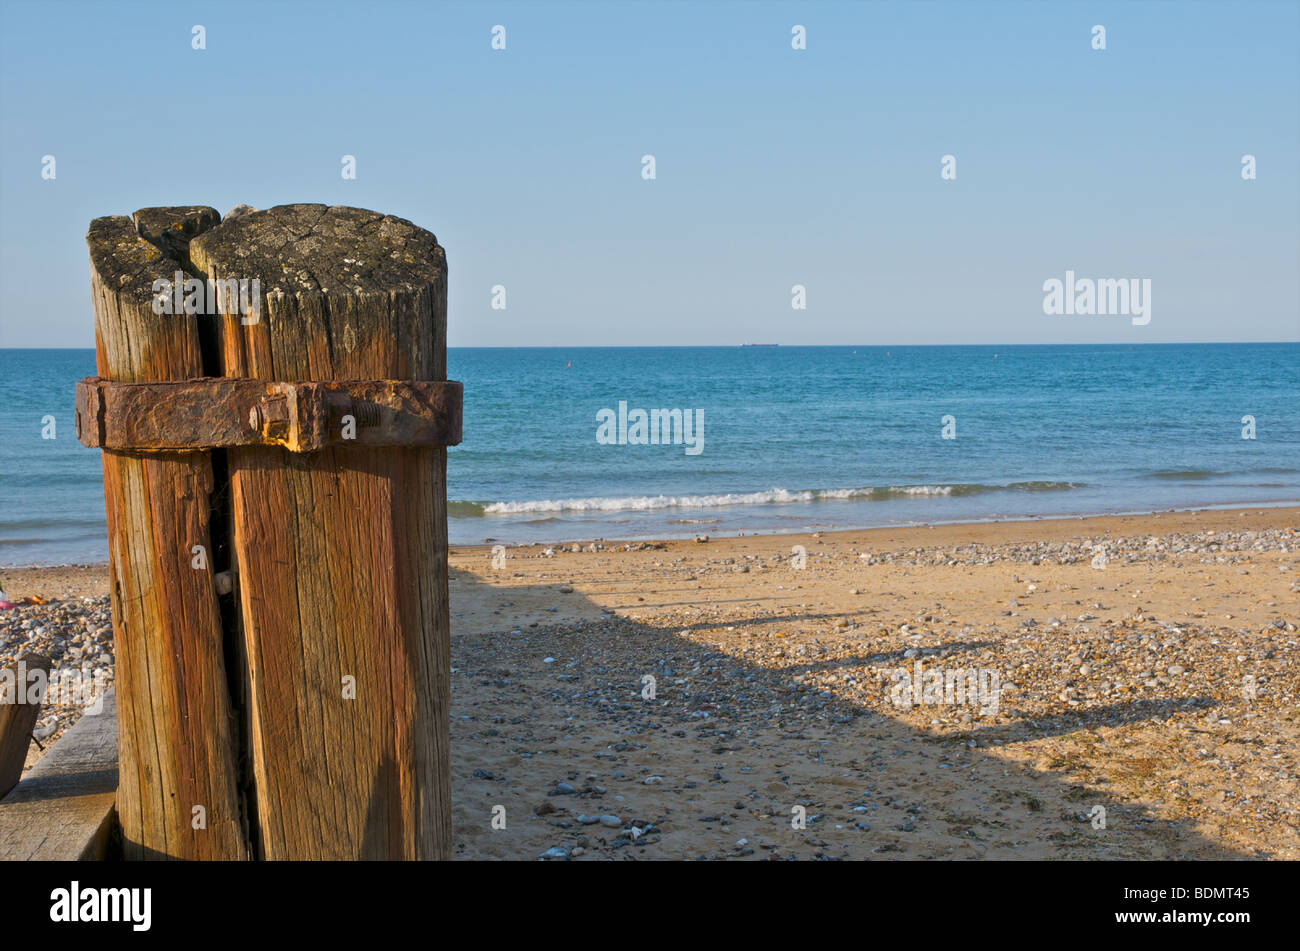 A wooden beach groin on the sandy beach at Cromer, Norfolk. Stock Photo